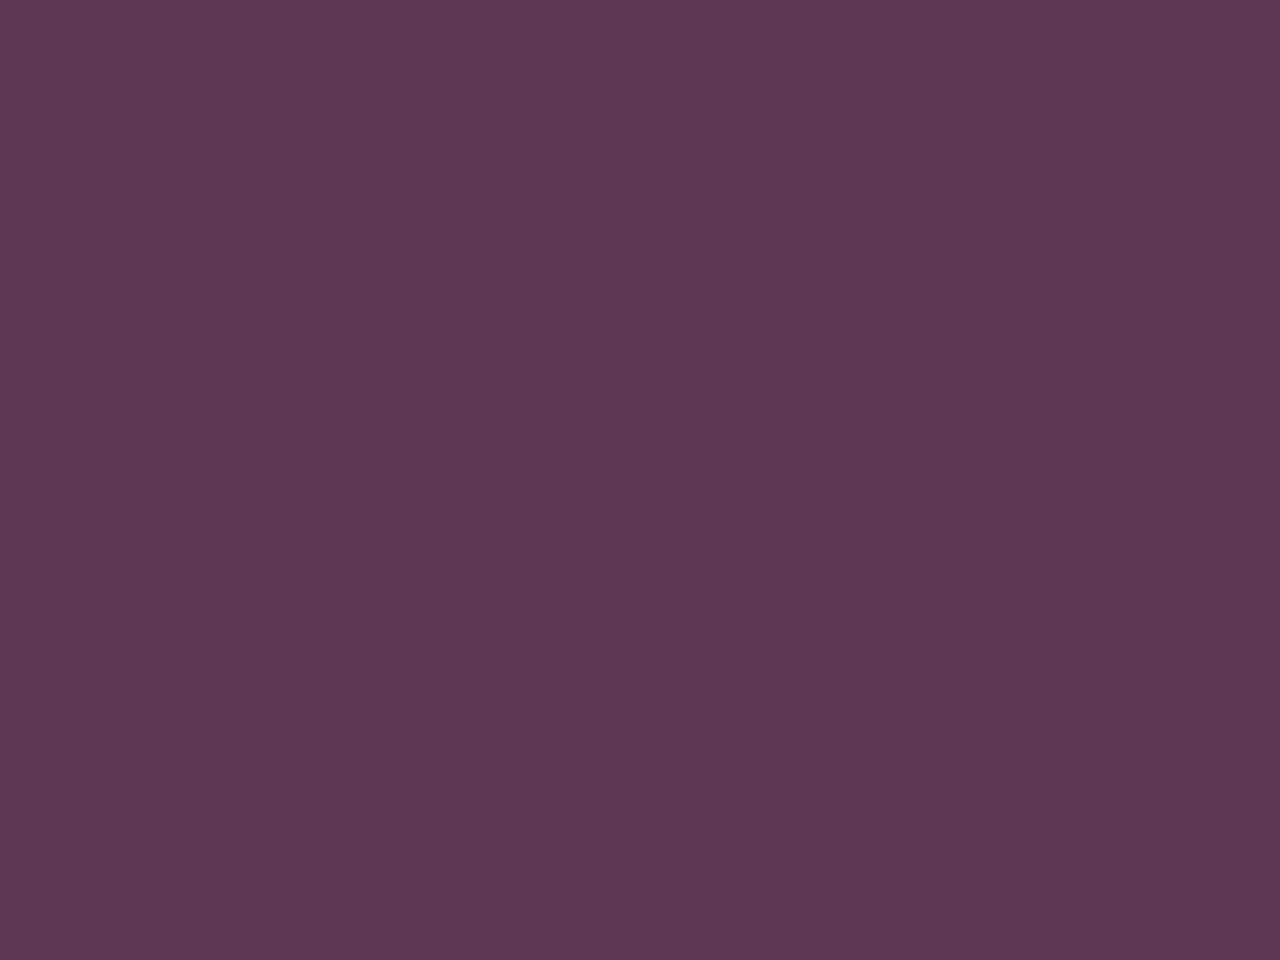 1280x960 Dark Byzantium Solid Color Background